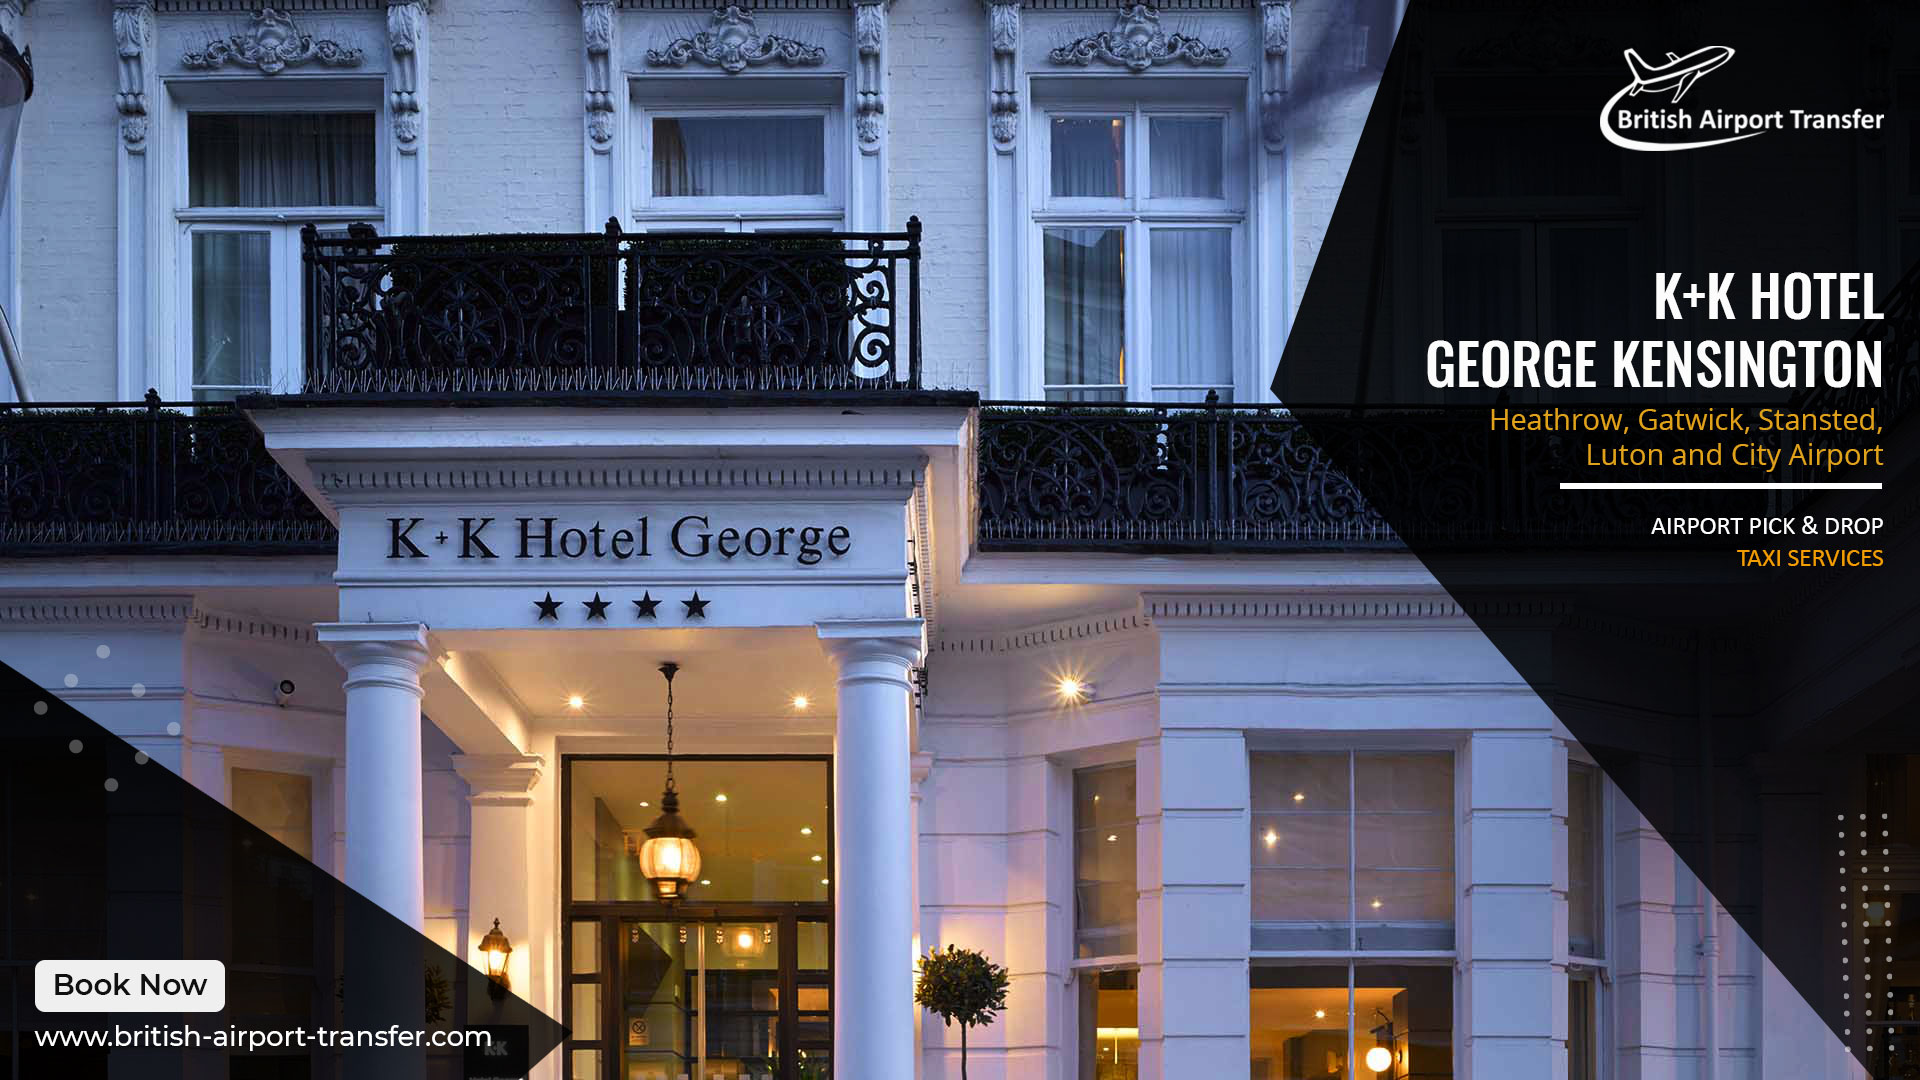 Taxi Service K+K Hotel George Kensington / SW5 9NB